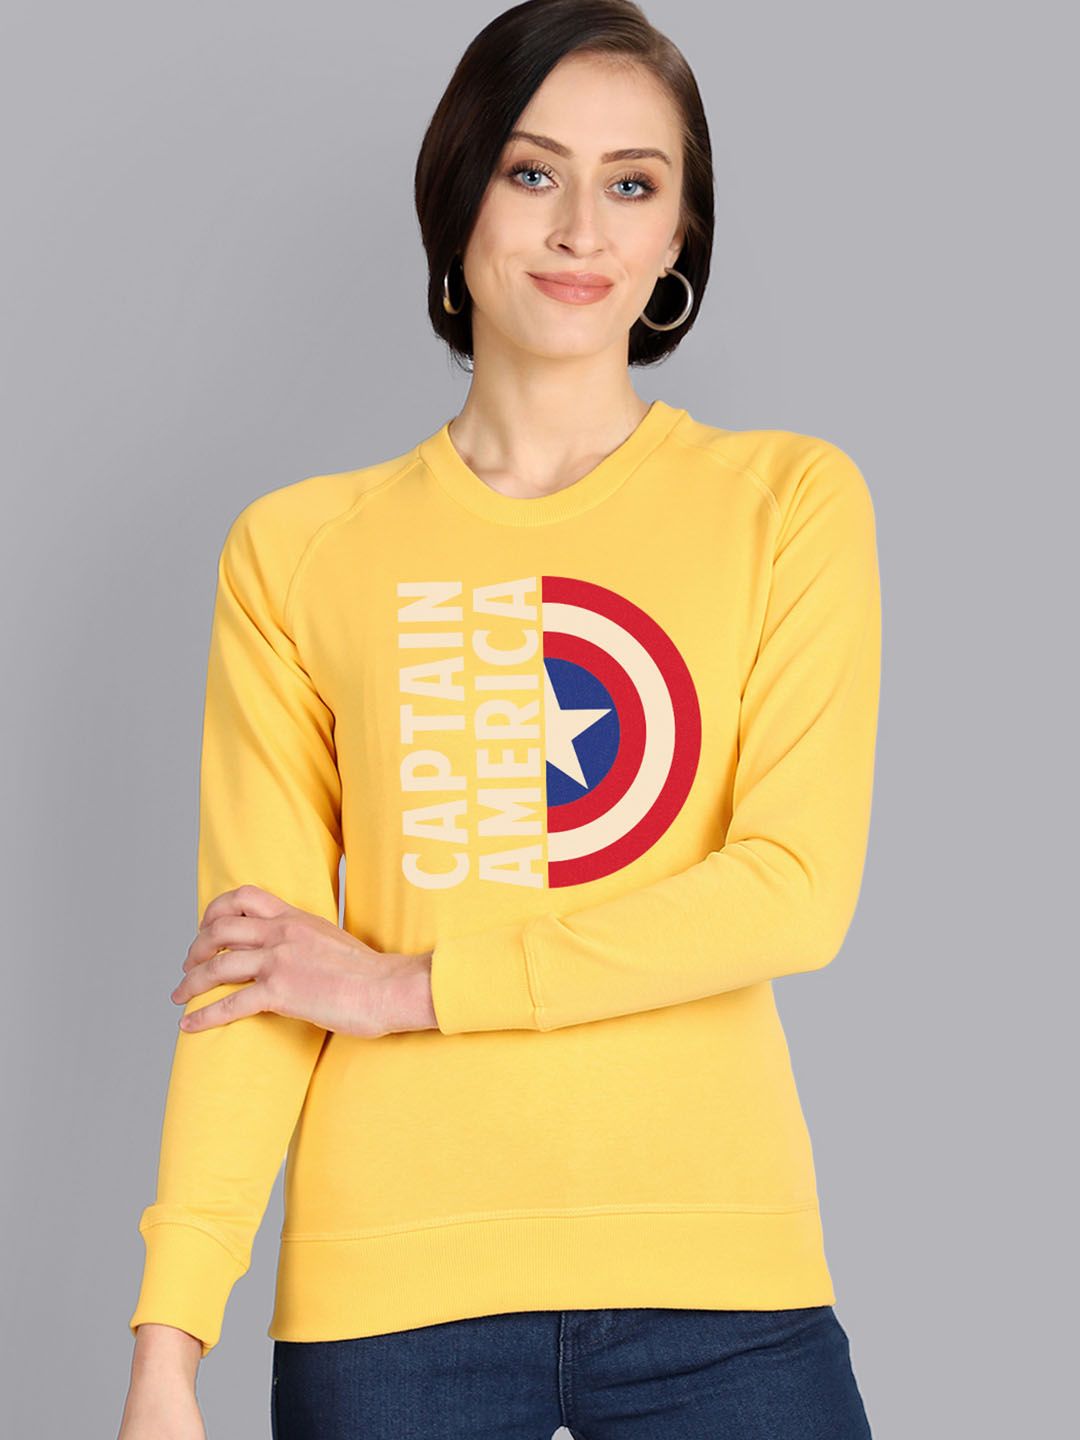 Free Authority Women Yellow Captain America Printed Sweatshirt Price in India